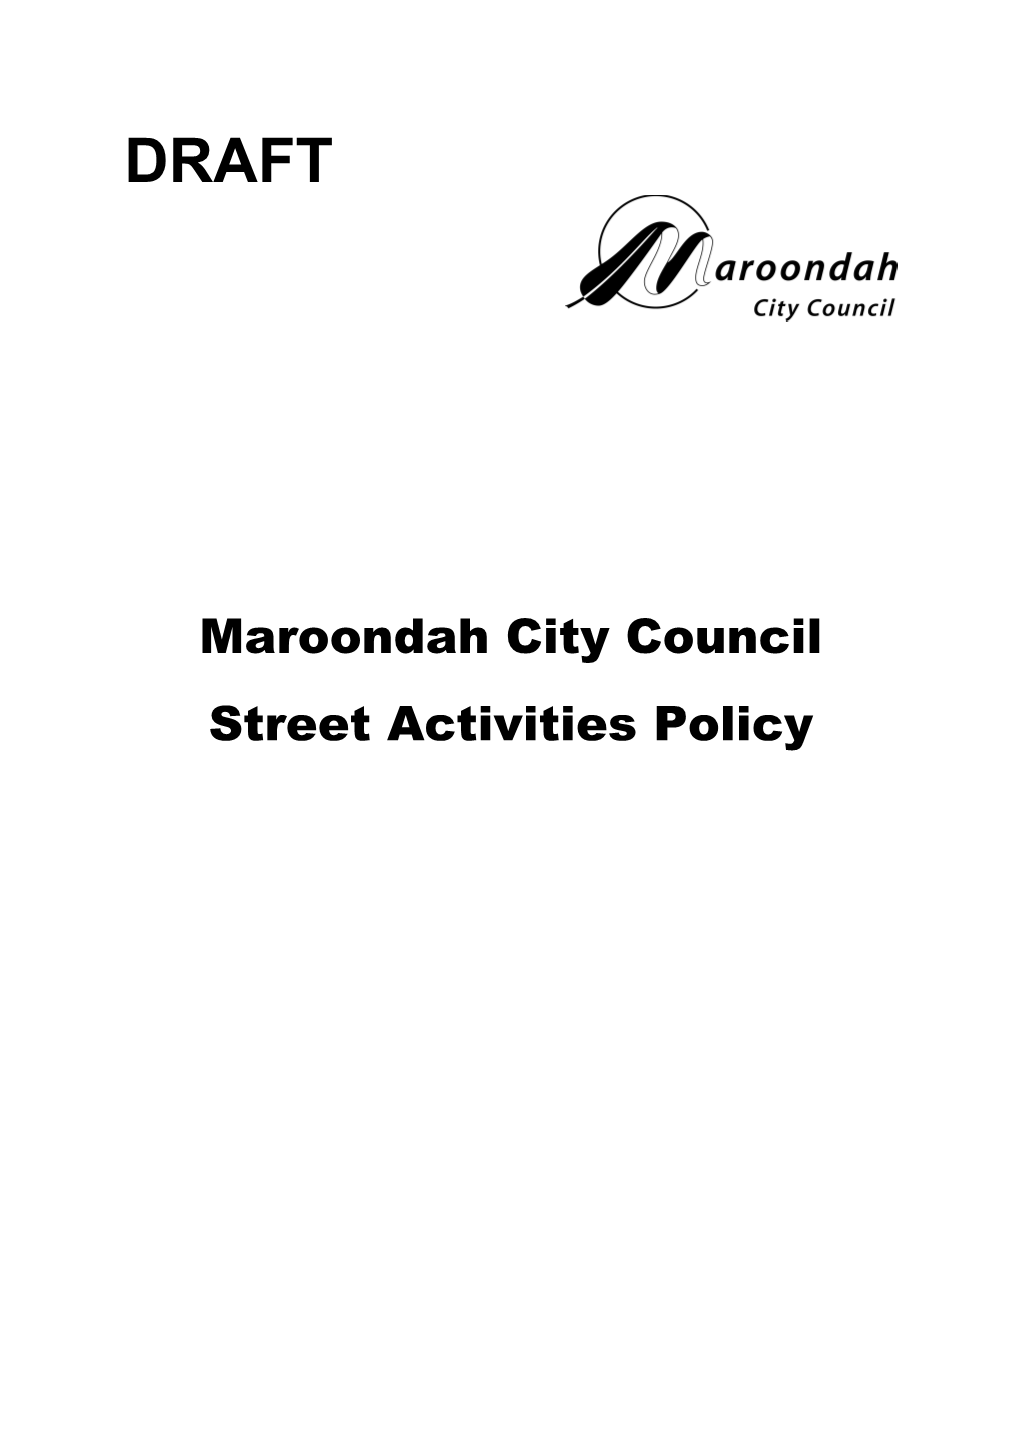 Street Activities Policy